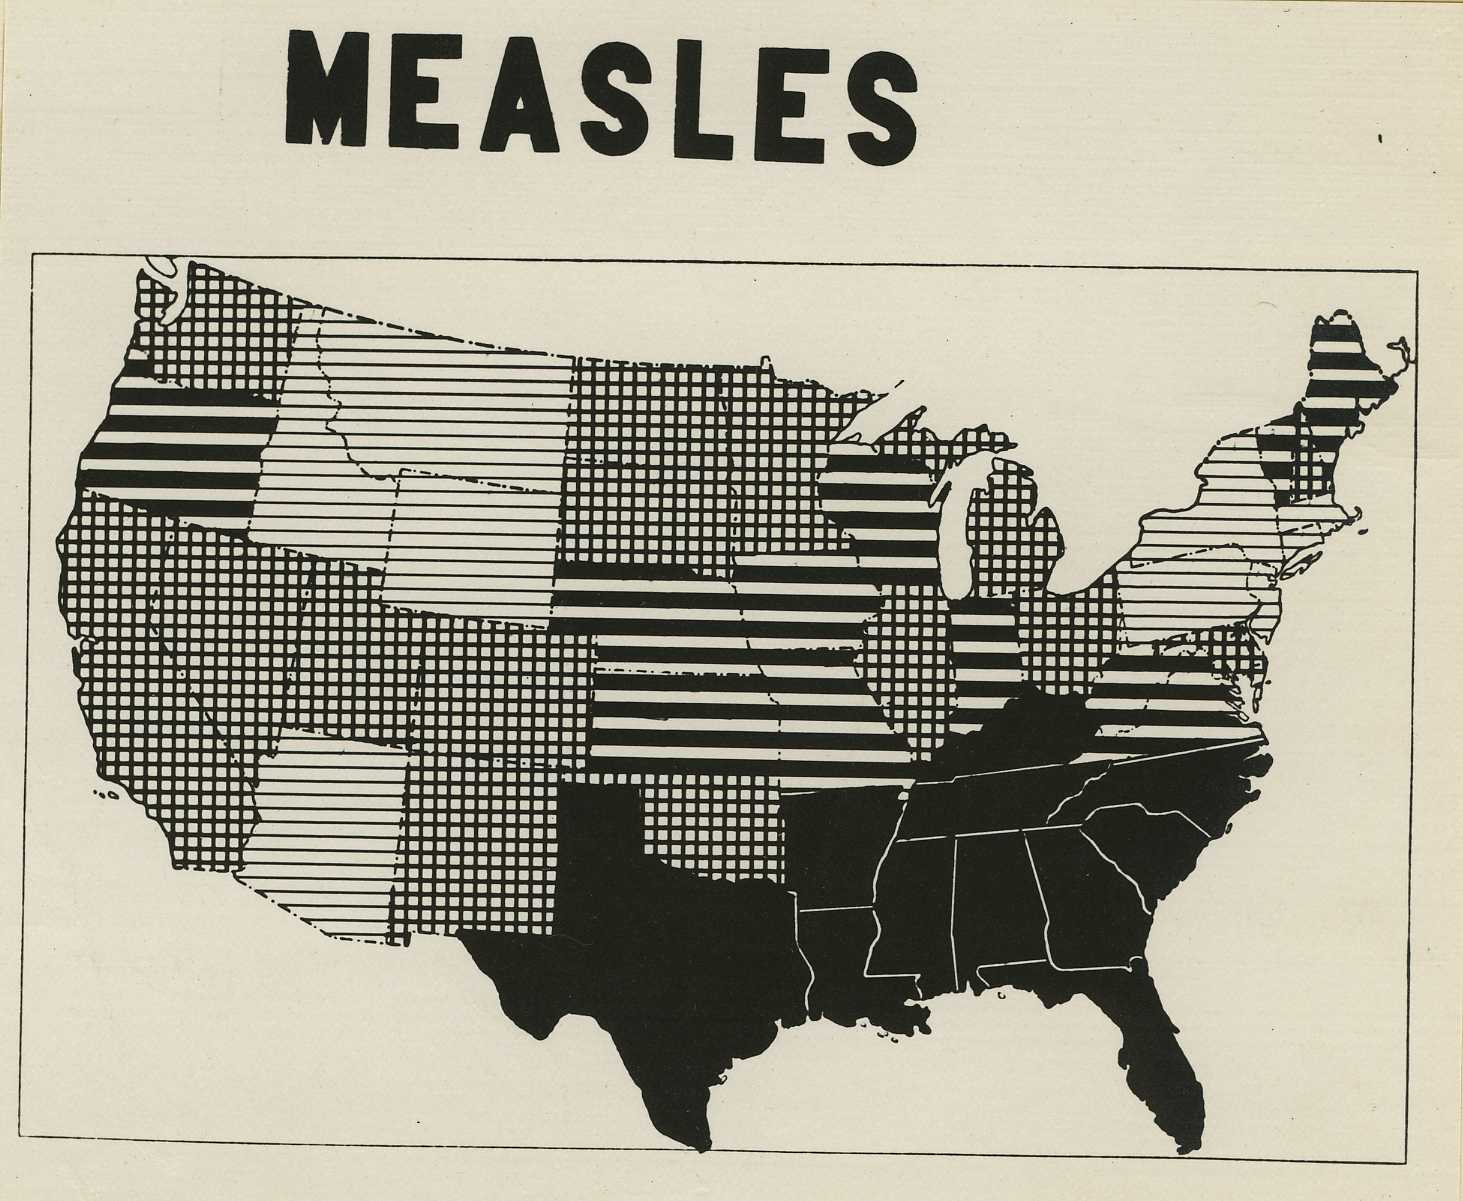 Measles cases aren’t spiking, despite talk of an outbreak